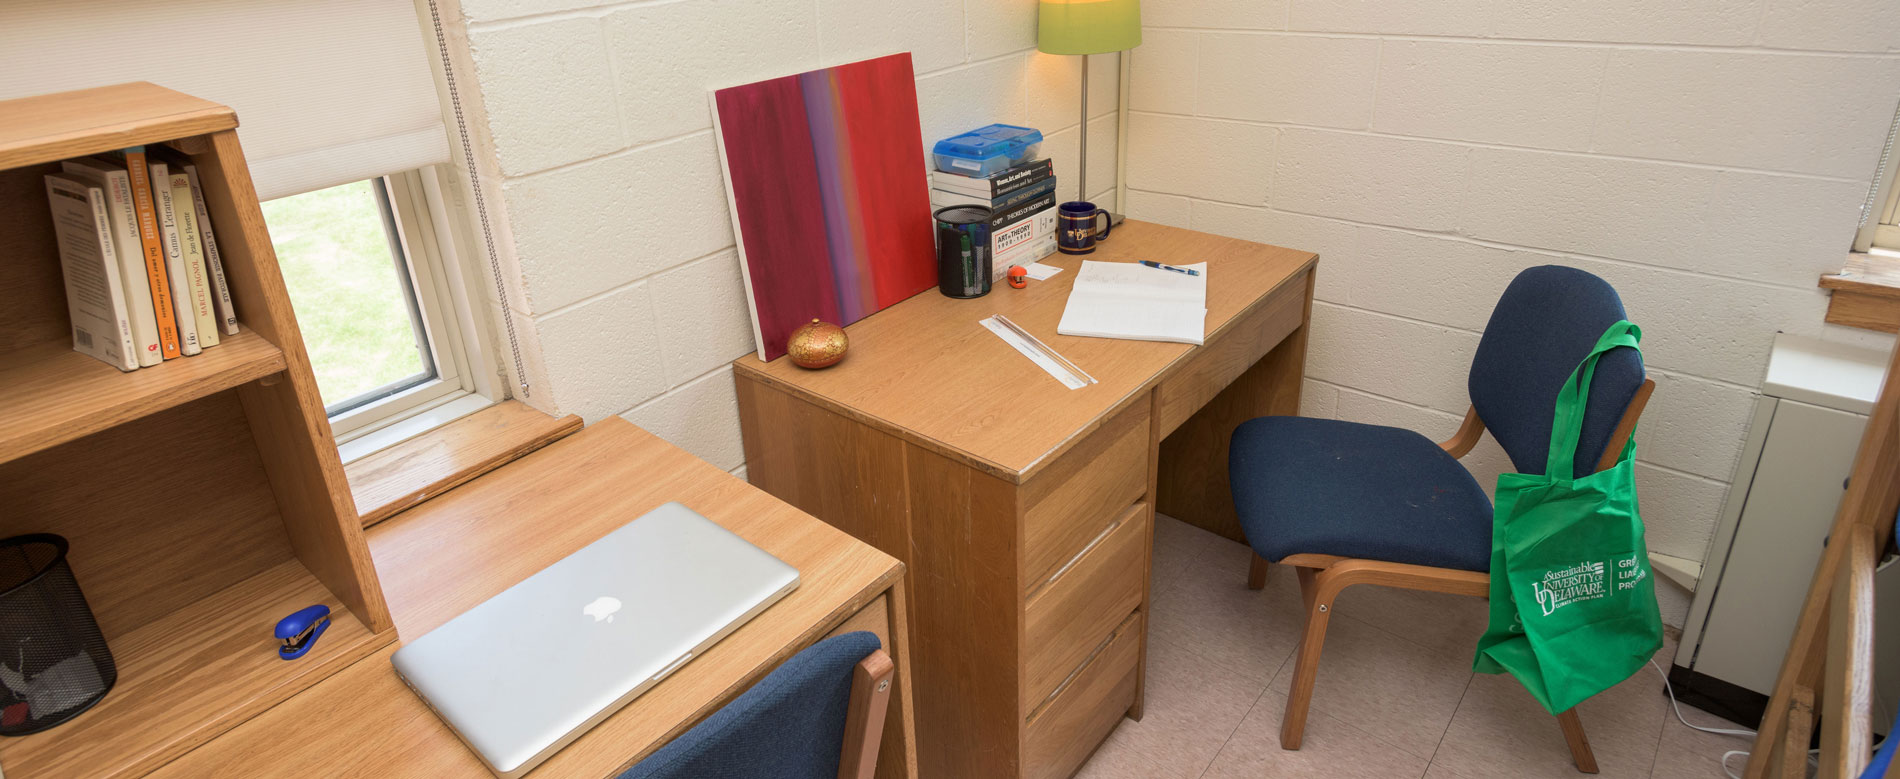 Two side-by-side desks in a Ray Street dorm room